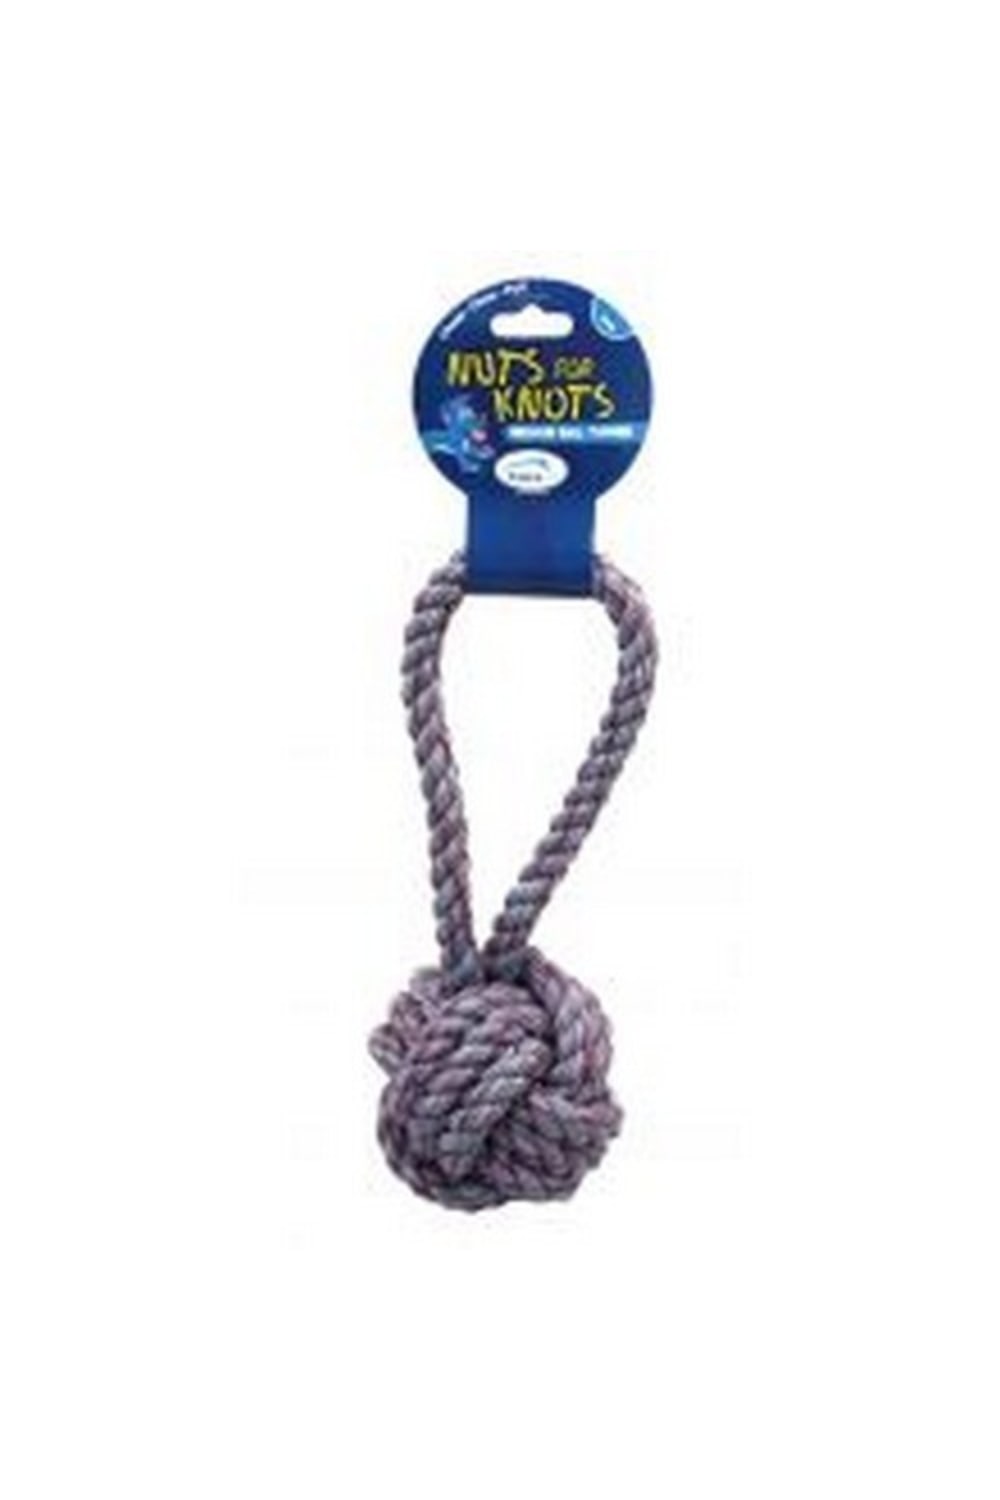 Happy Pet Nuts 4 Knots Tugger Dog Chew Toy (Purple) (10 inch)